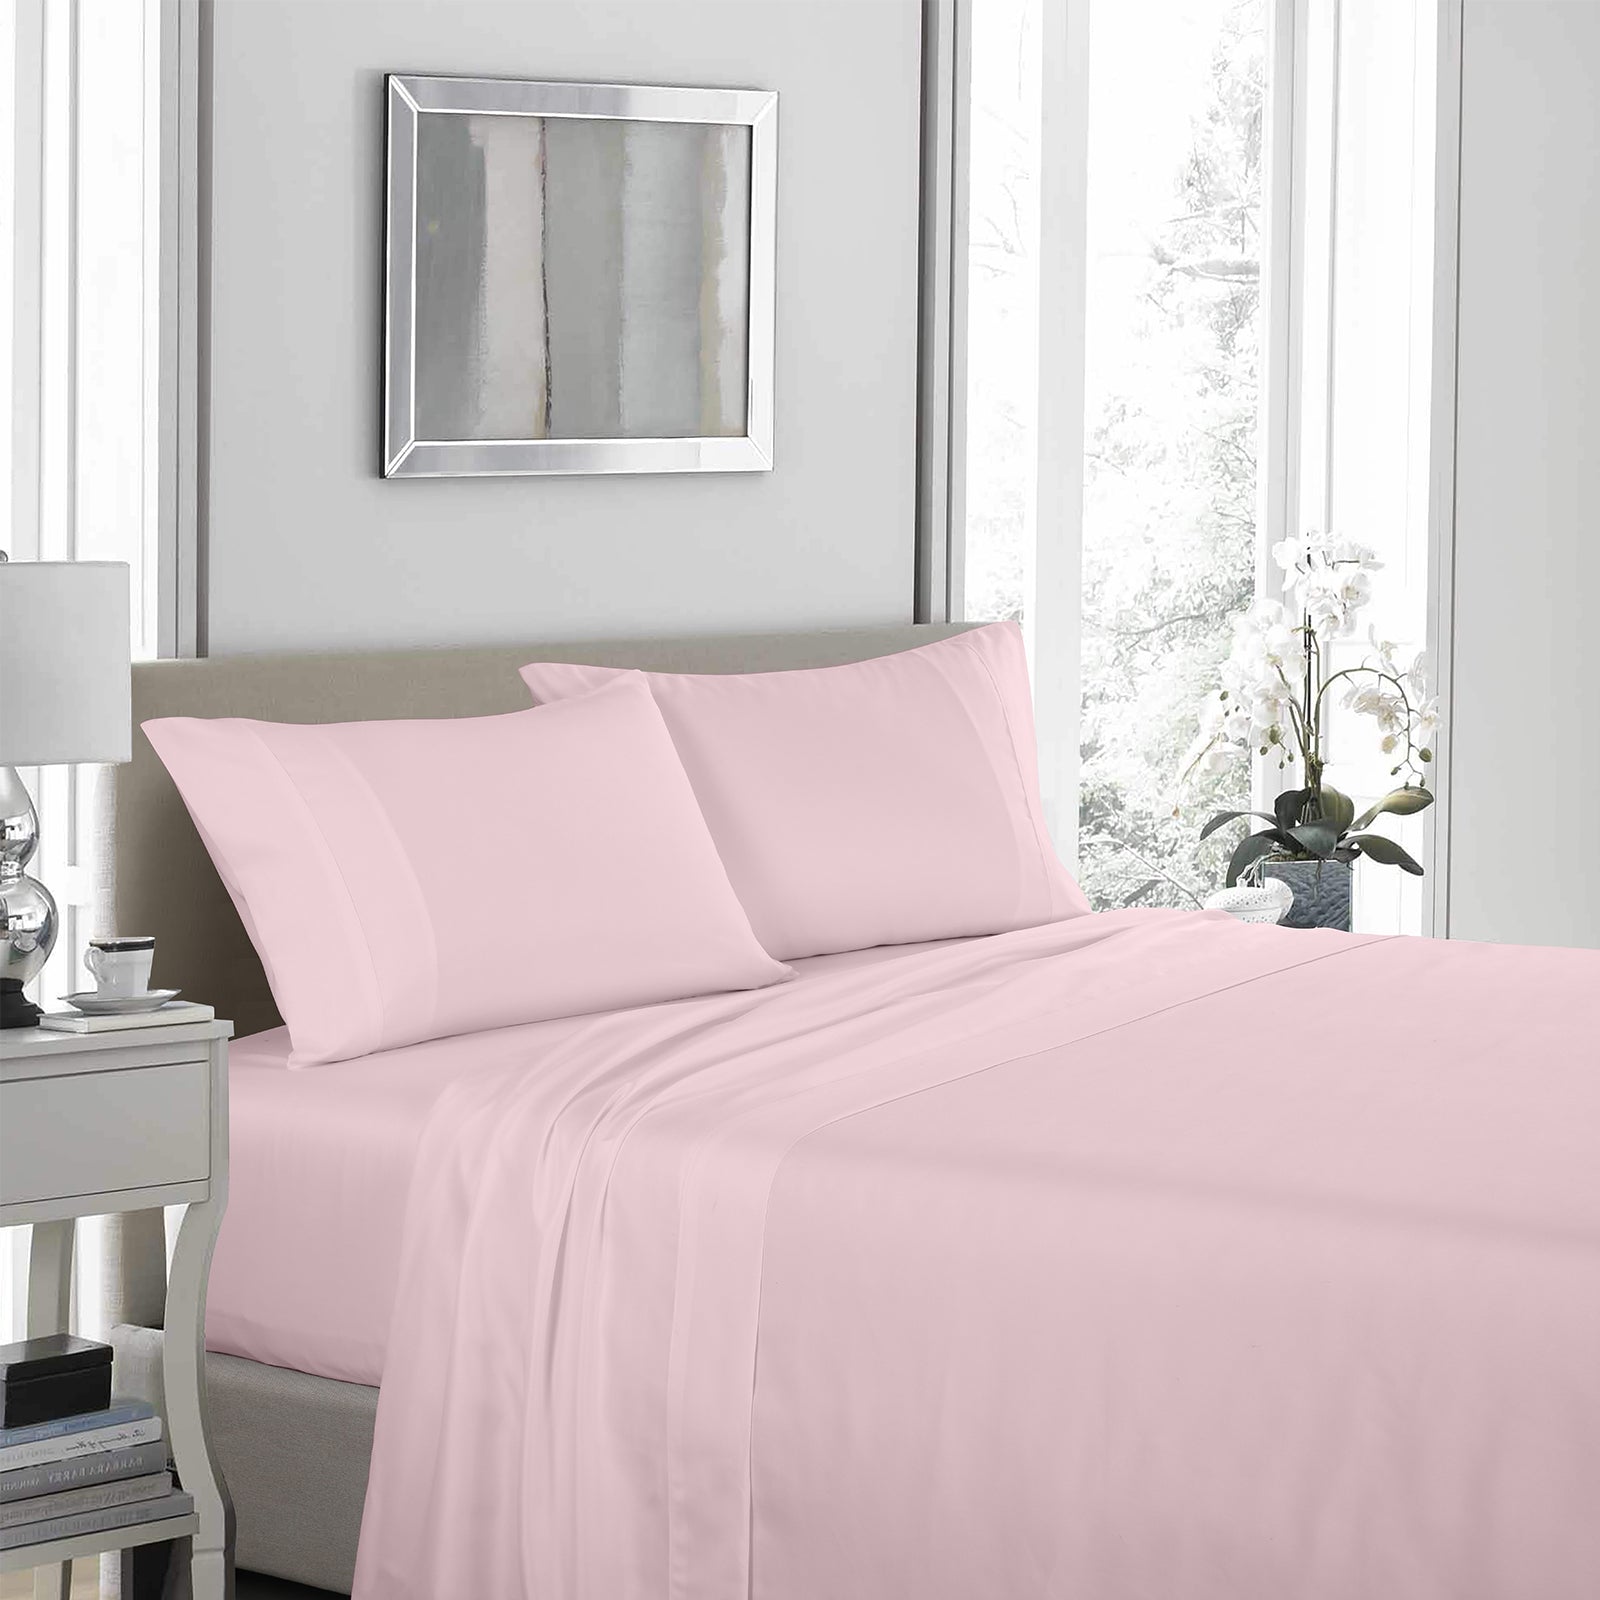 Royal Comfort - 1200TC Ultrasoft 4 Pc Sheet Set - Double - Soft Pink